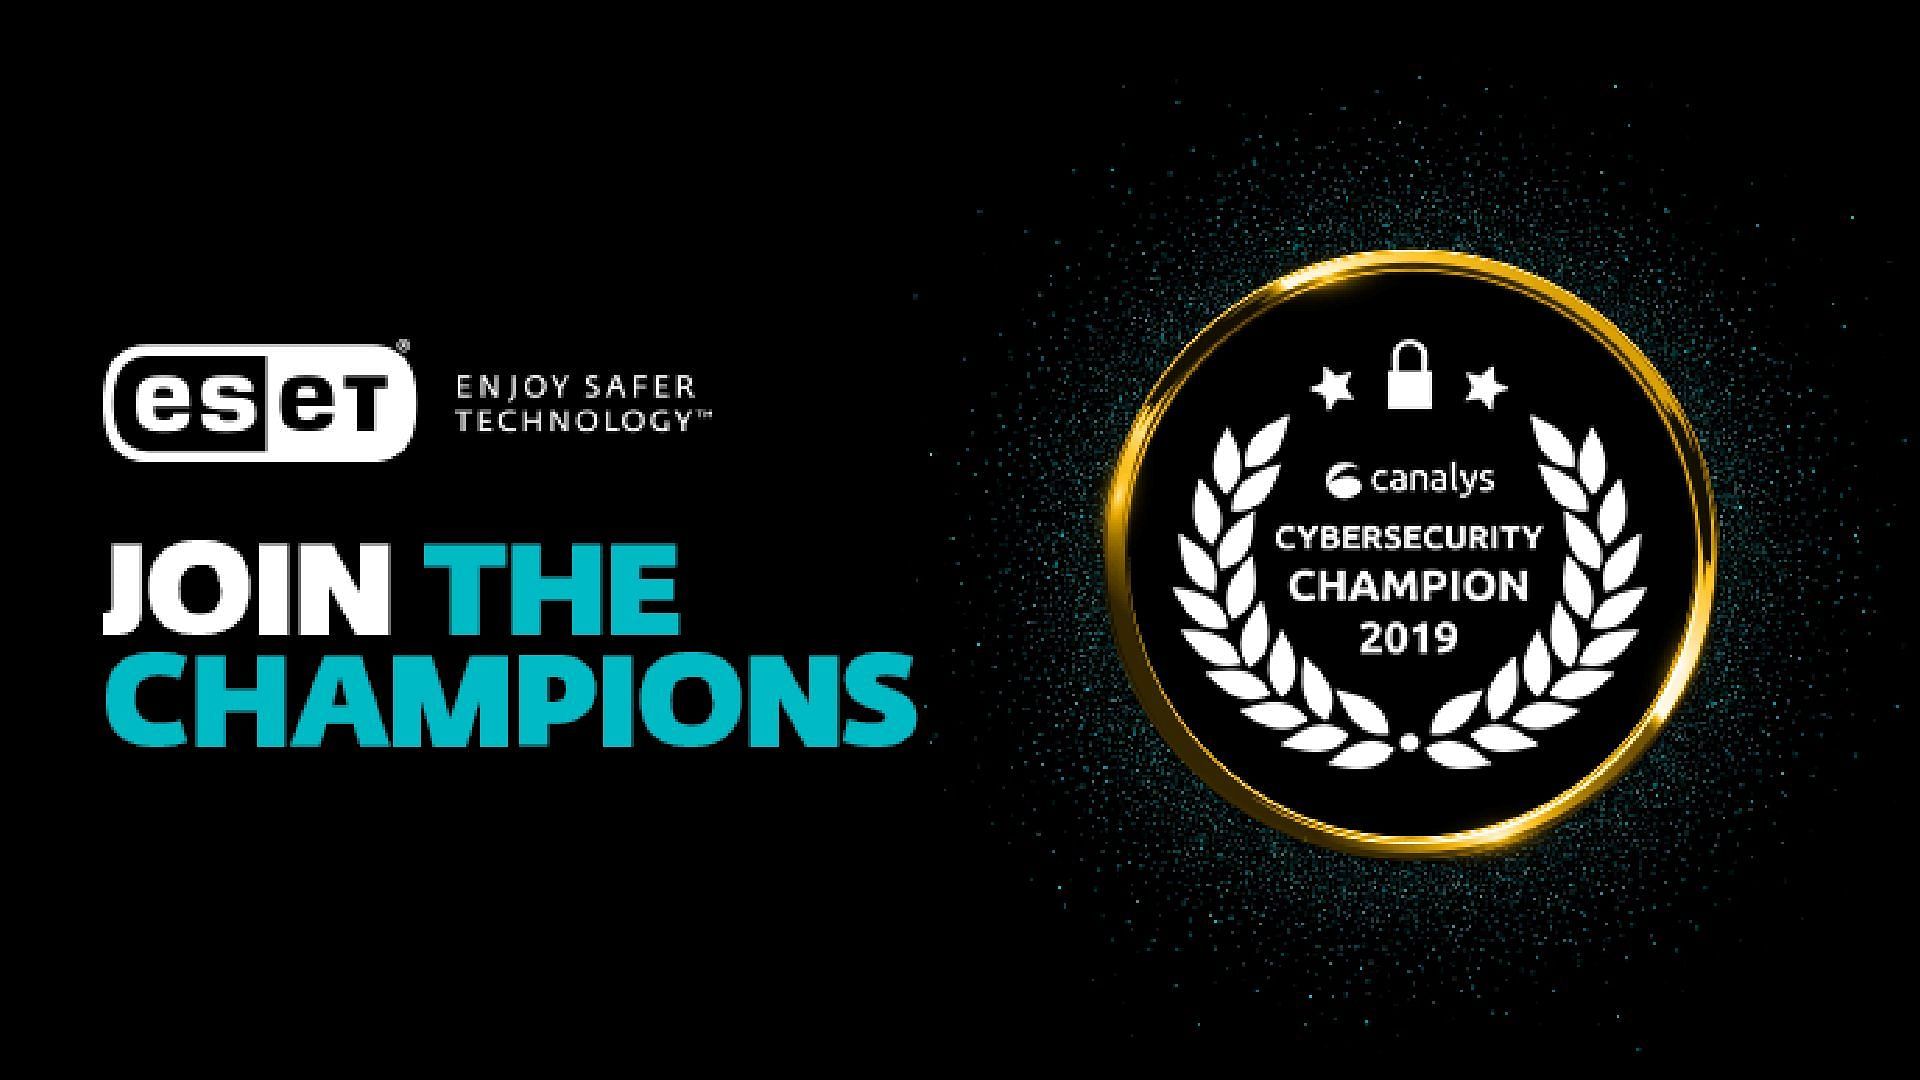 ESET won the Cybersecurity Champion award in 2019 (Image via ESET Facebook)